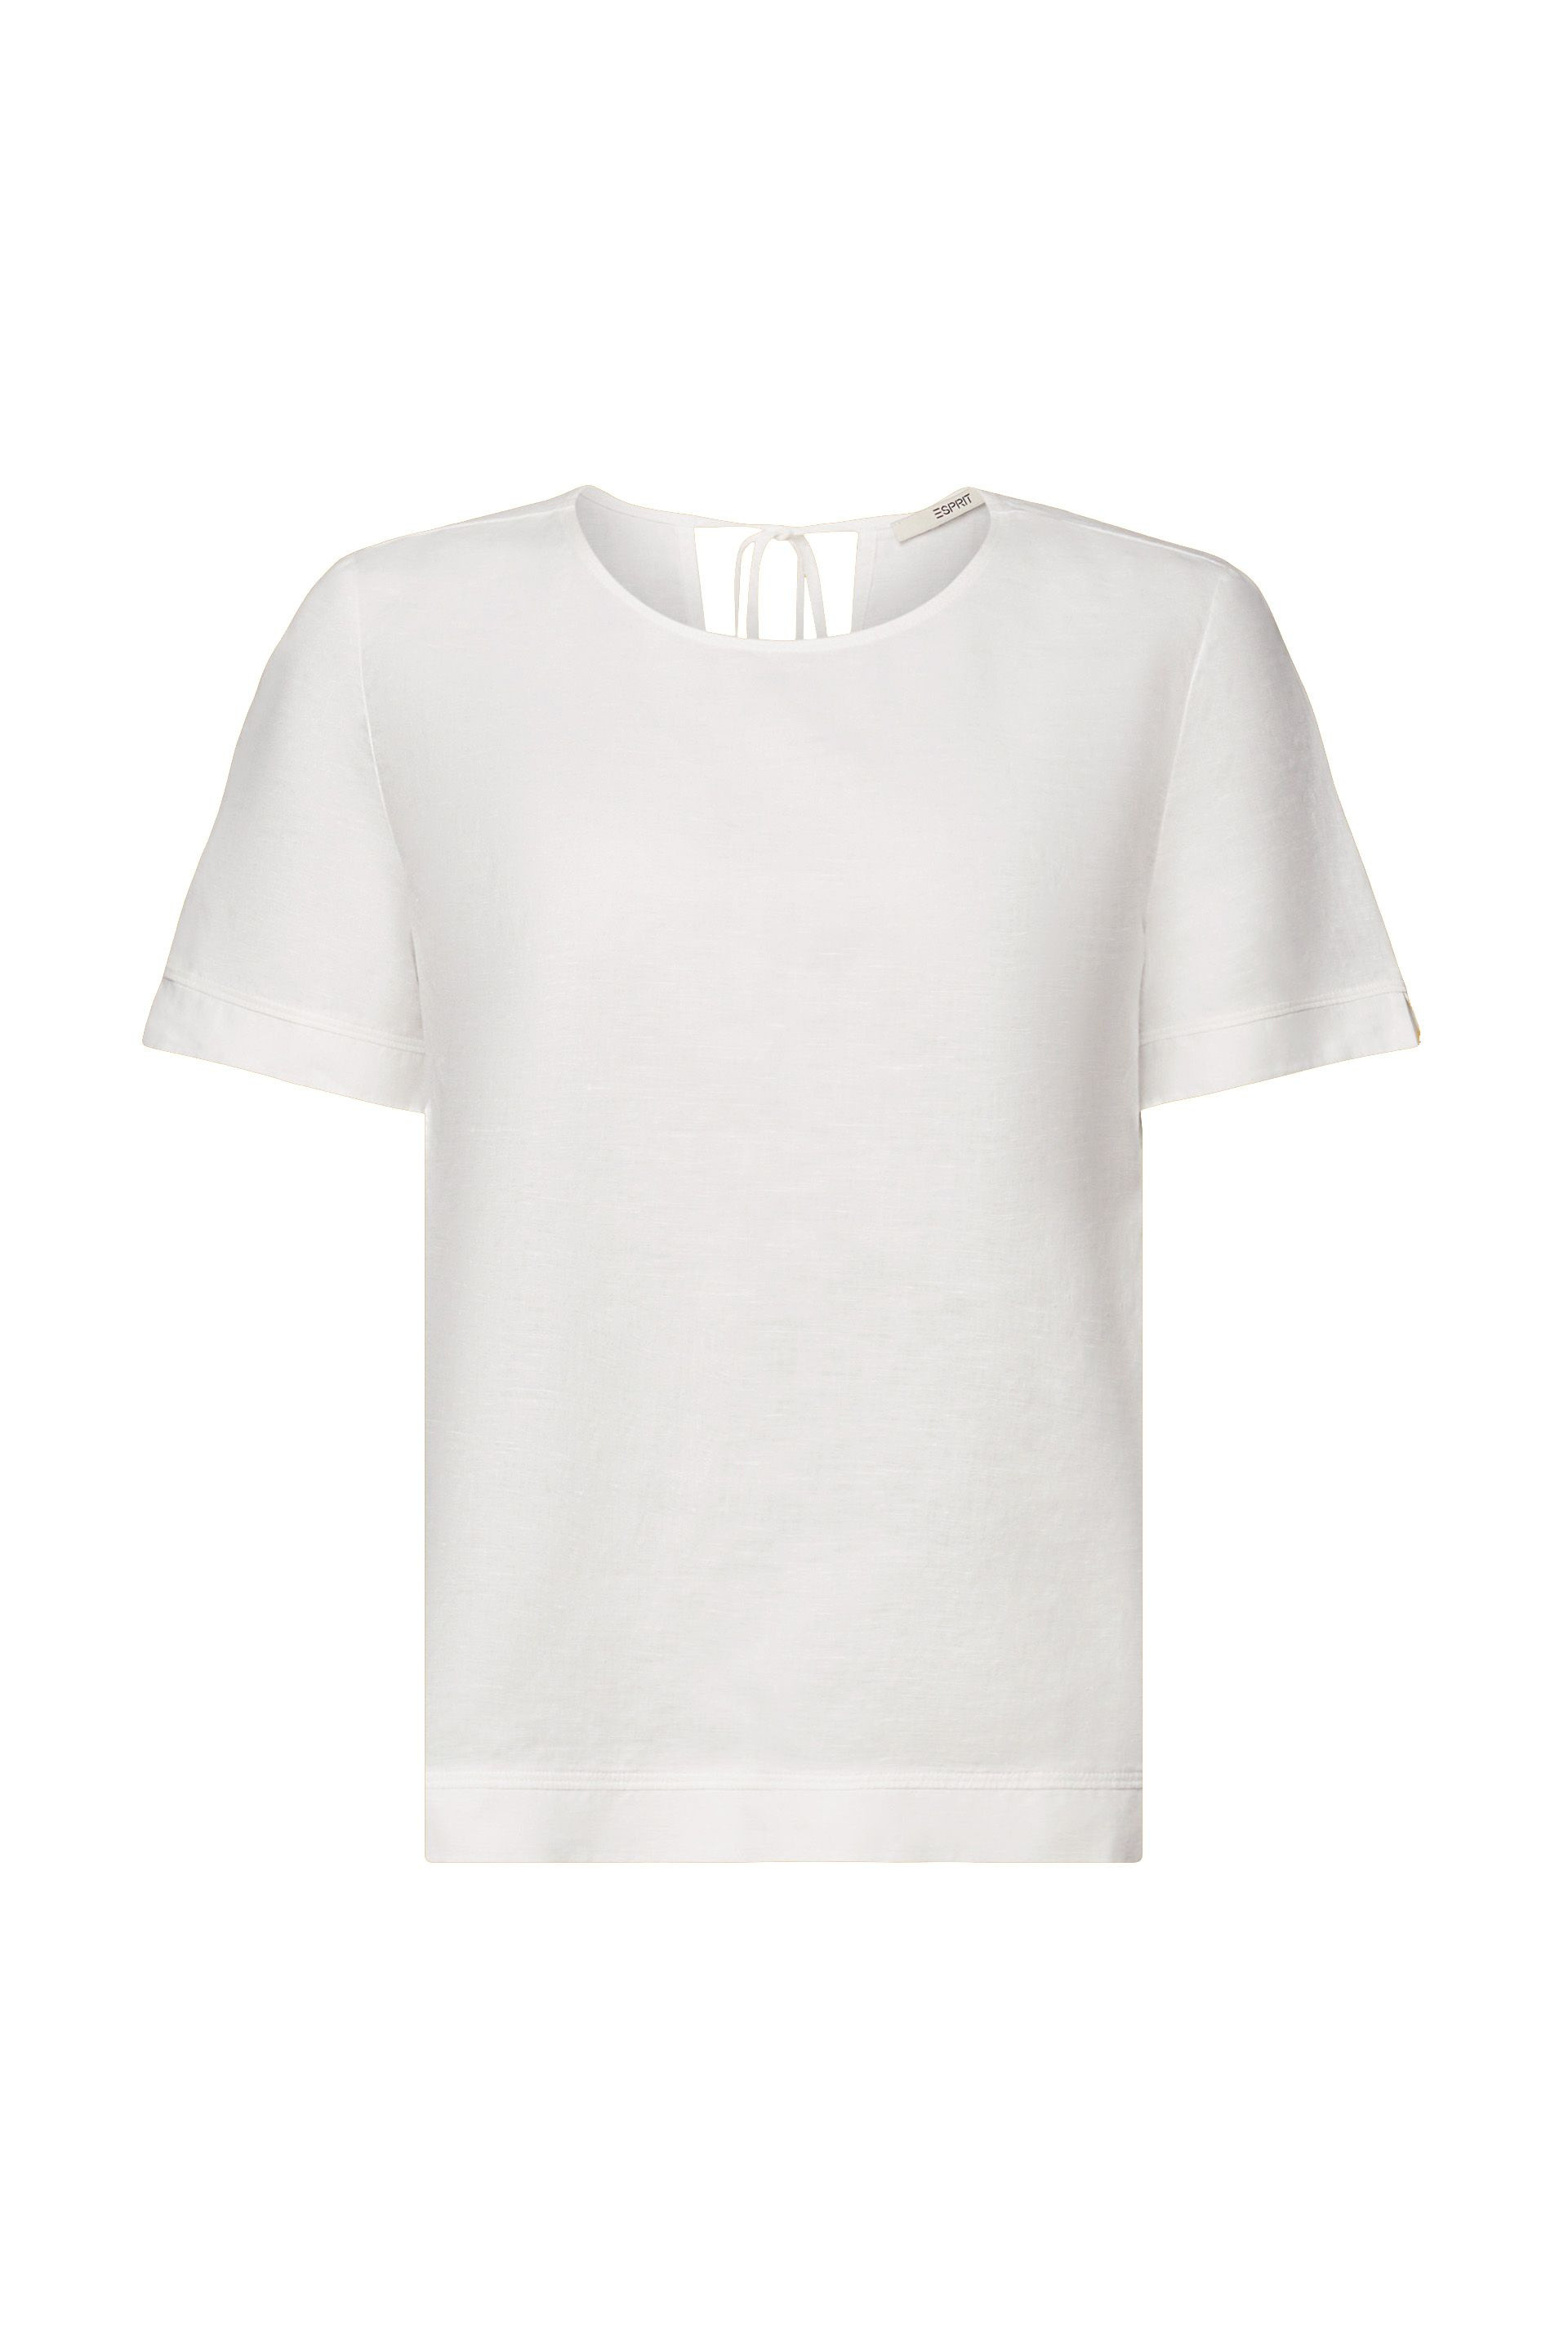 Esprit - Linen blend blouse, White, large image number 0